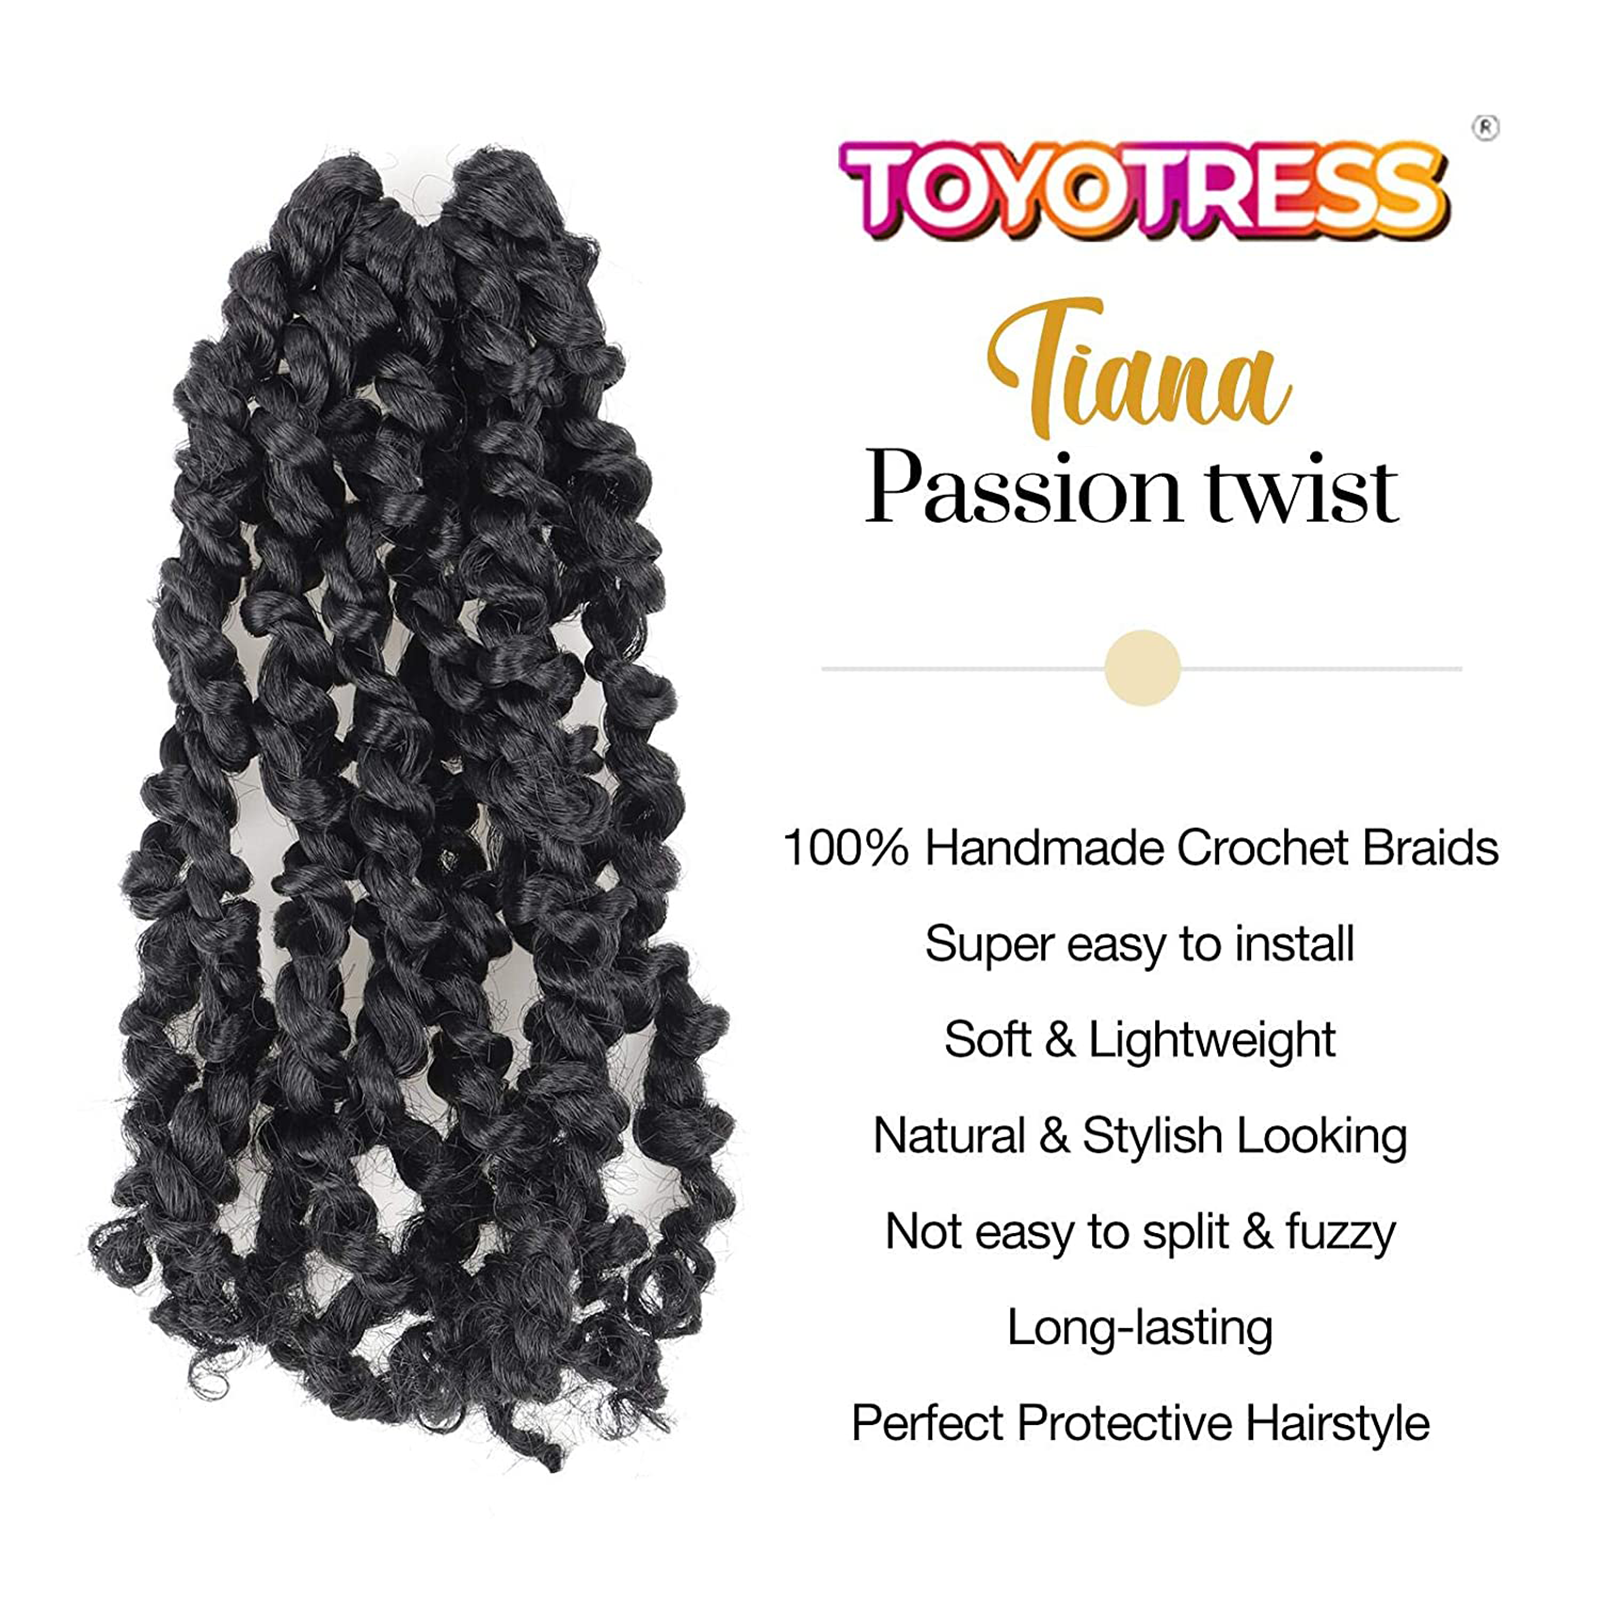 Tiana Passion Twist 10